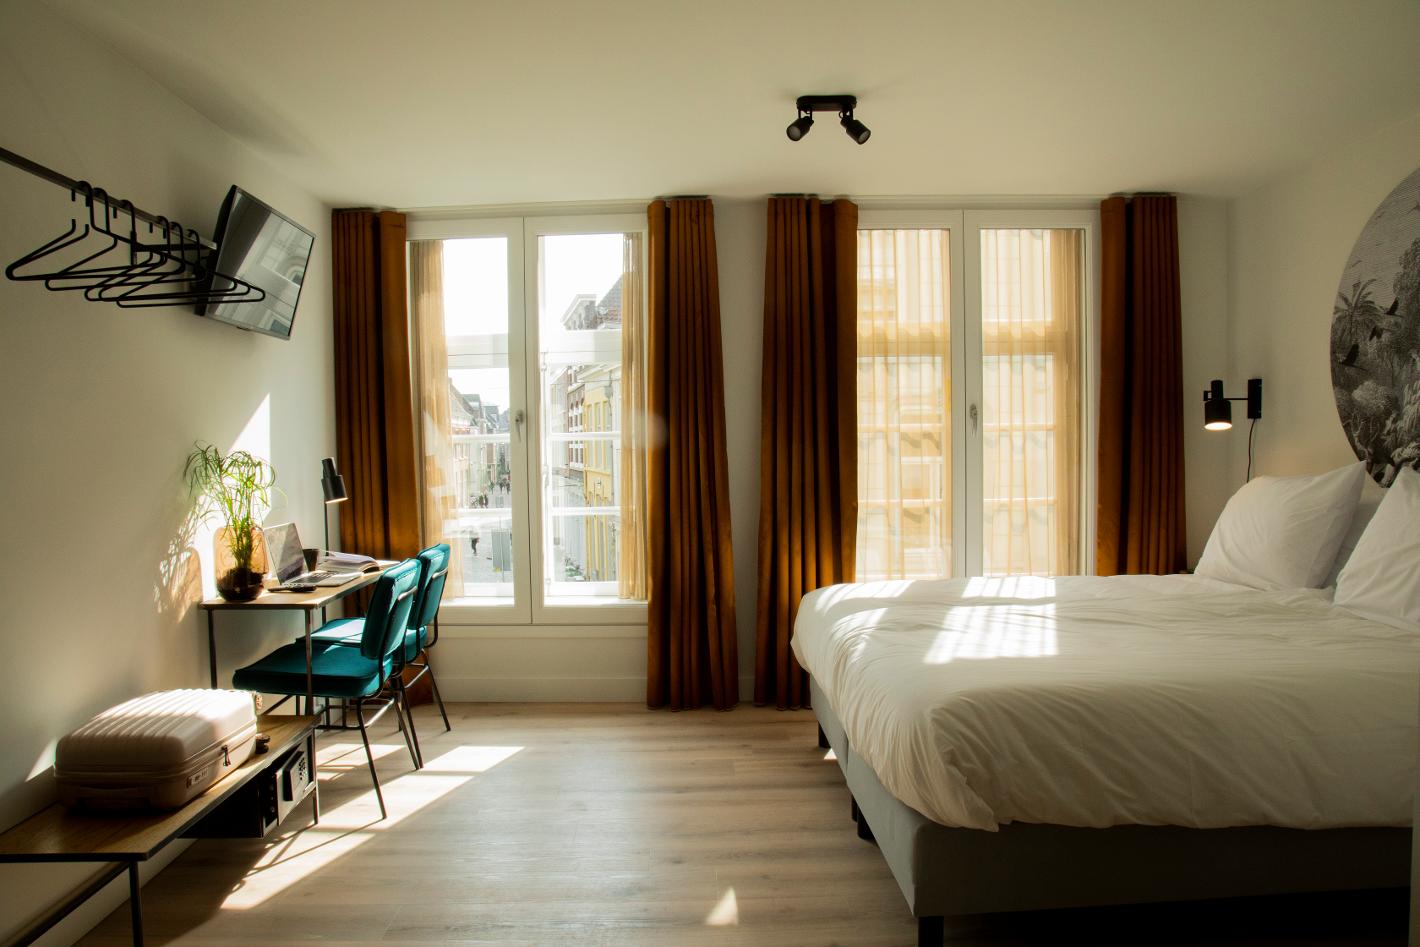 Foto Hotel Haverkist in Den Bosch, Slapen, Overnachten - #1